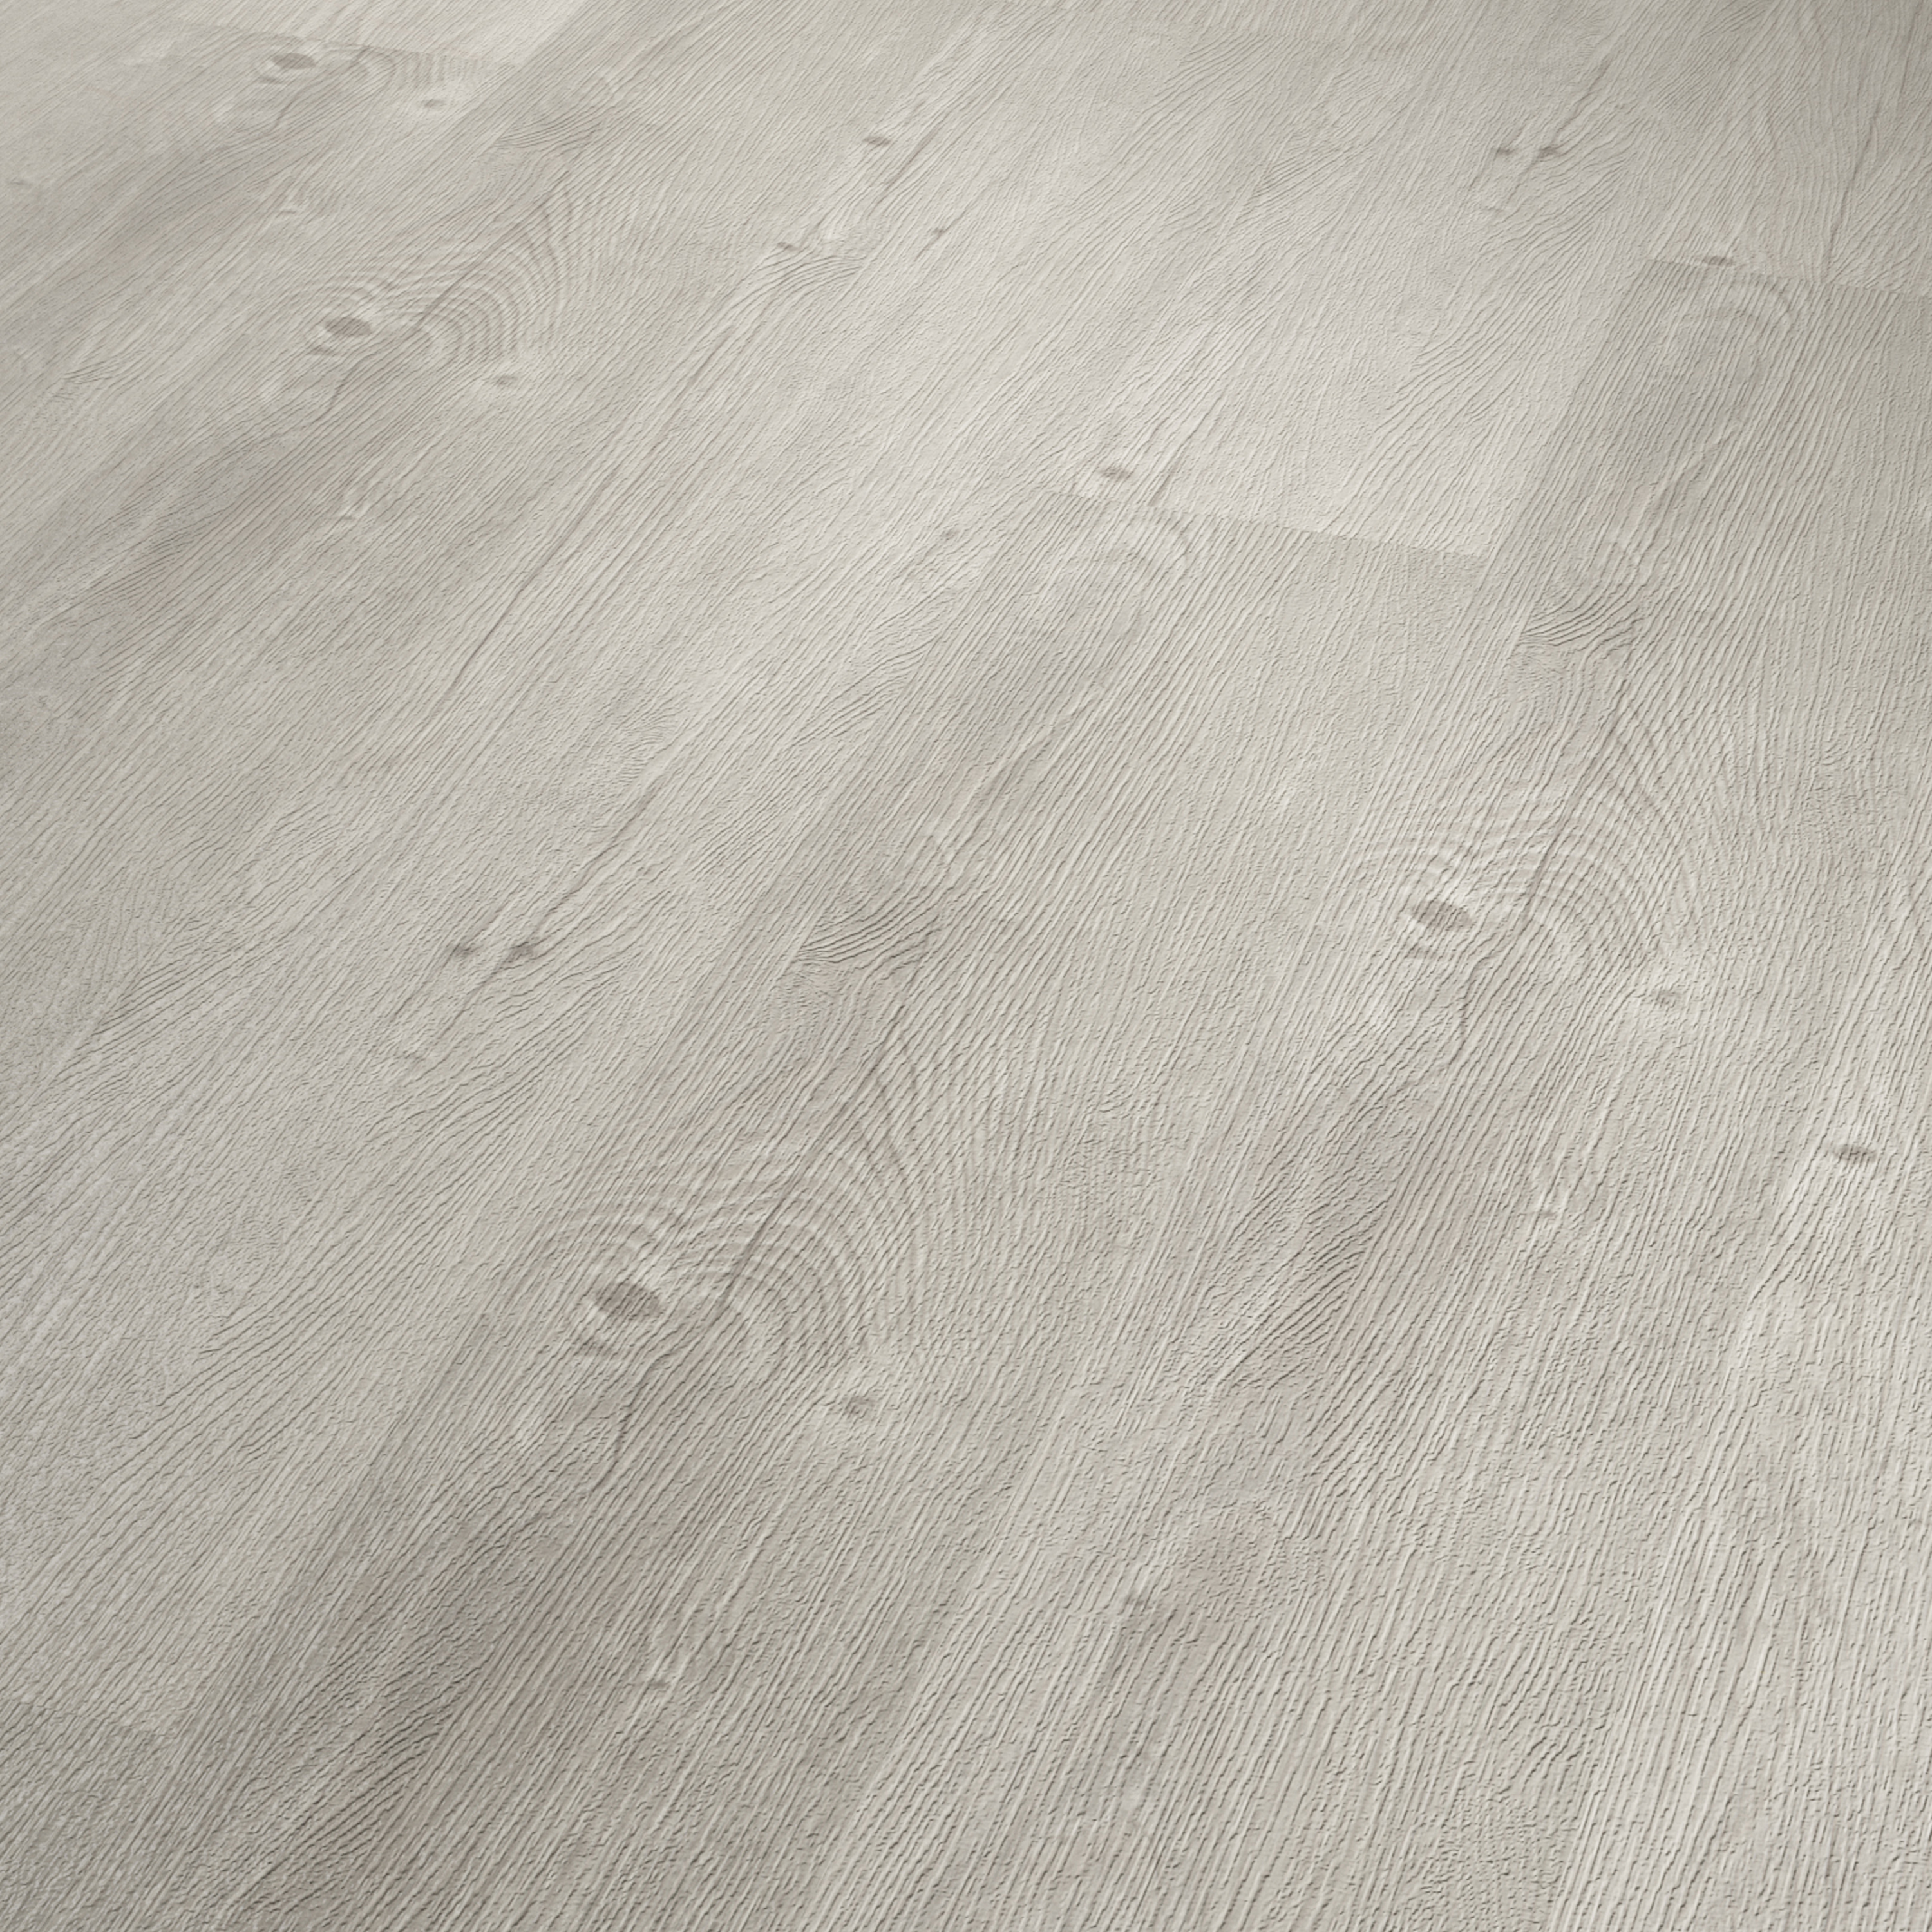 Image of ClickCo Betula Birch Grey Oak SPC Flooring with Integrated Underlay - 2.22m2